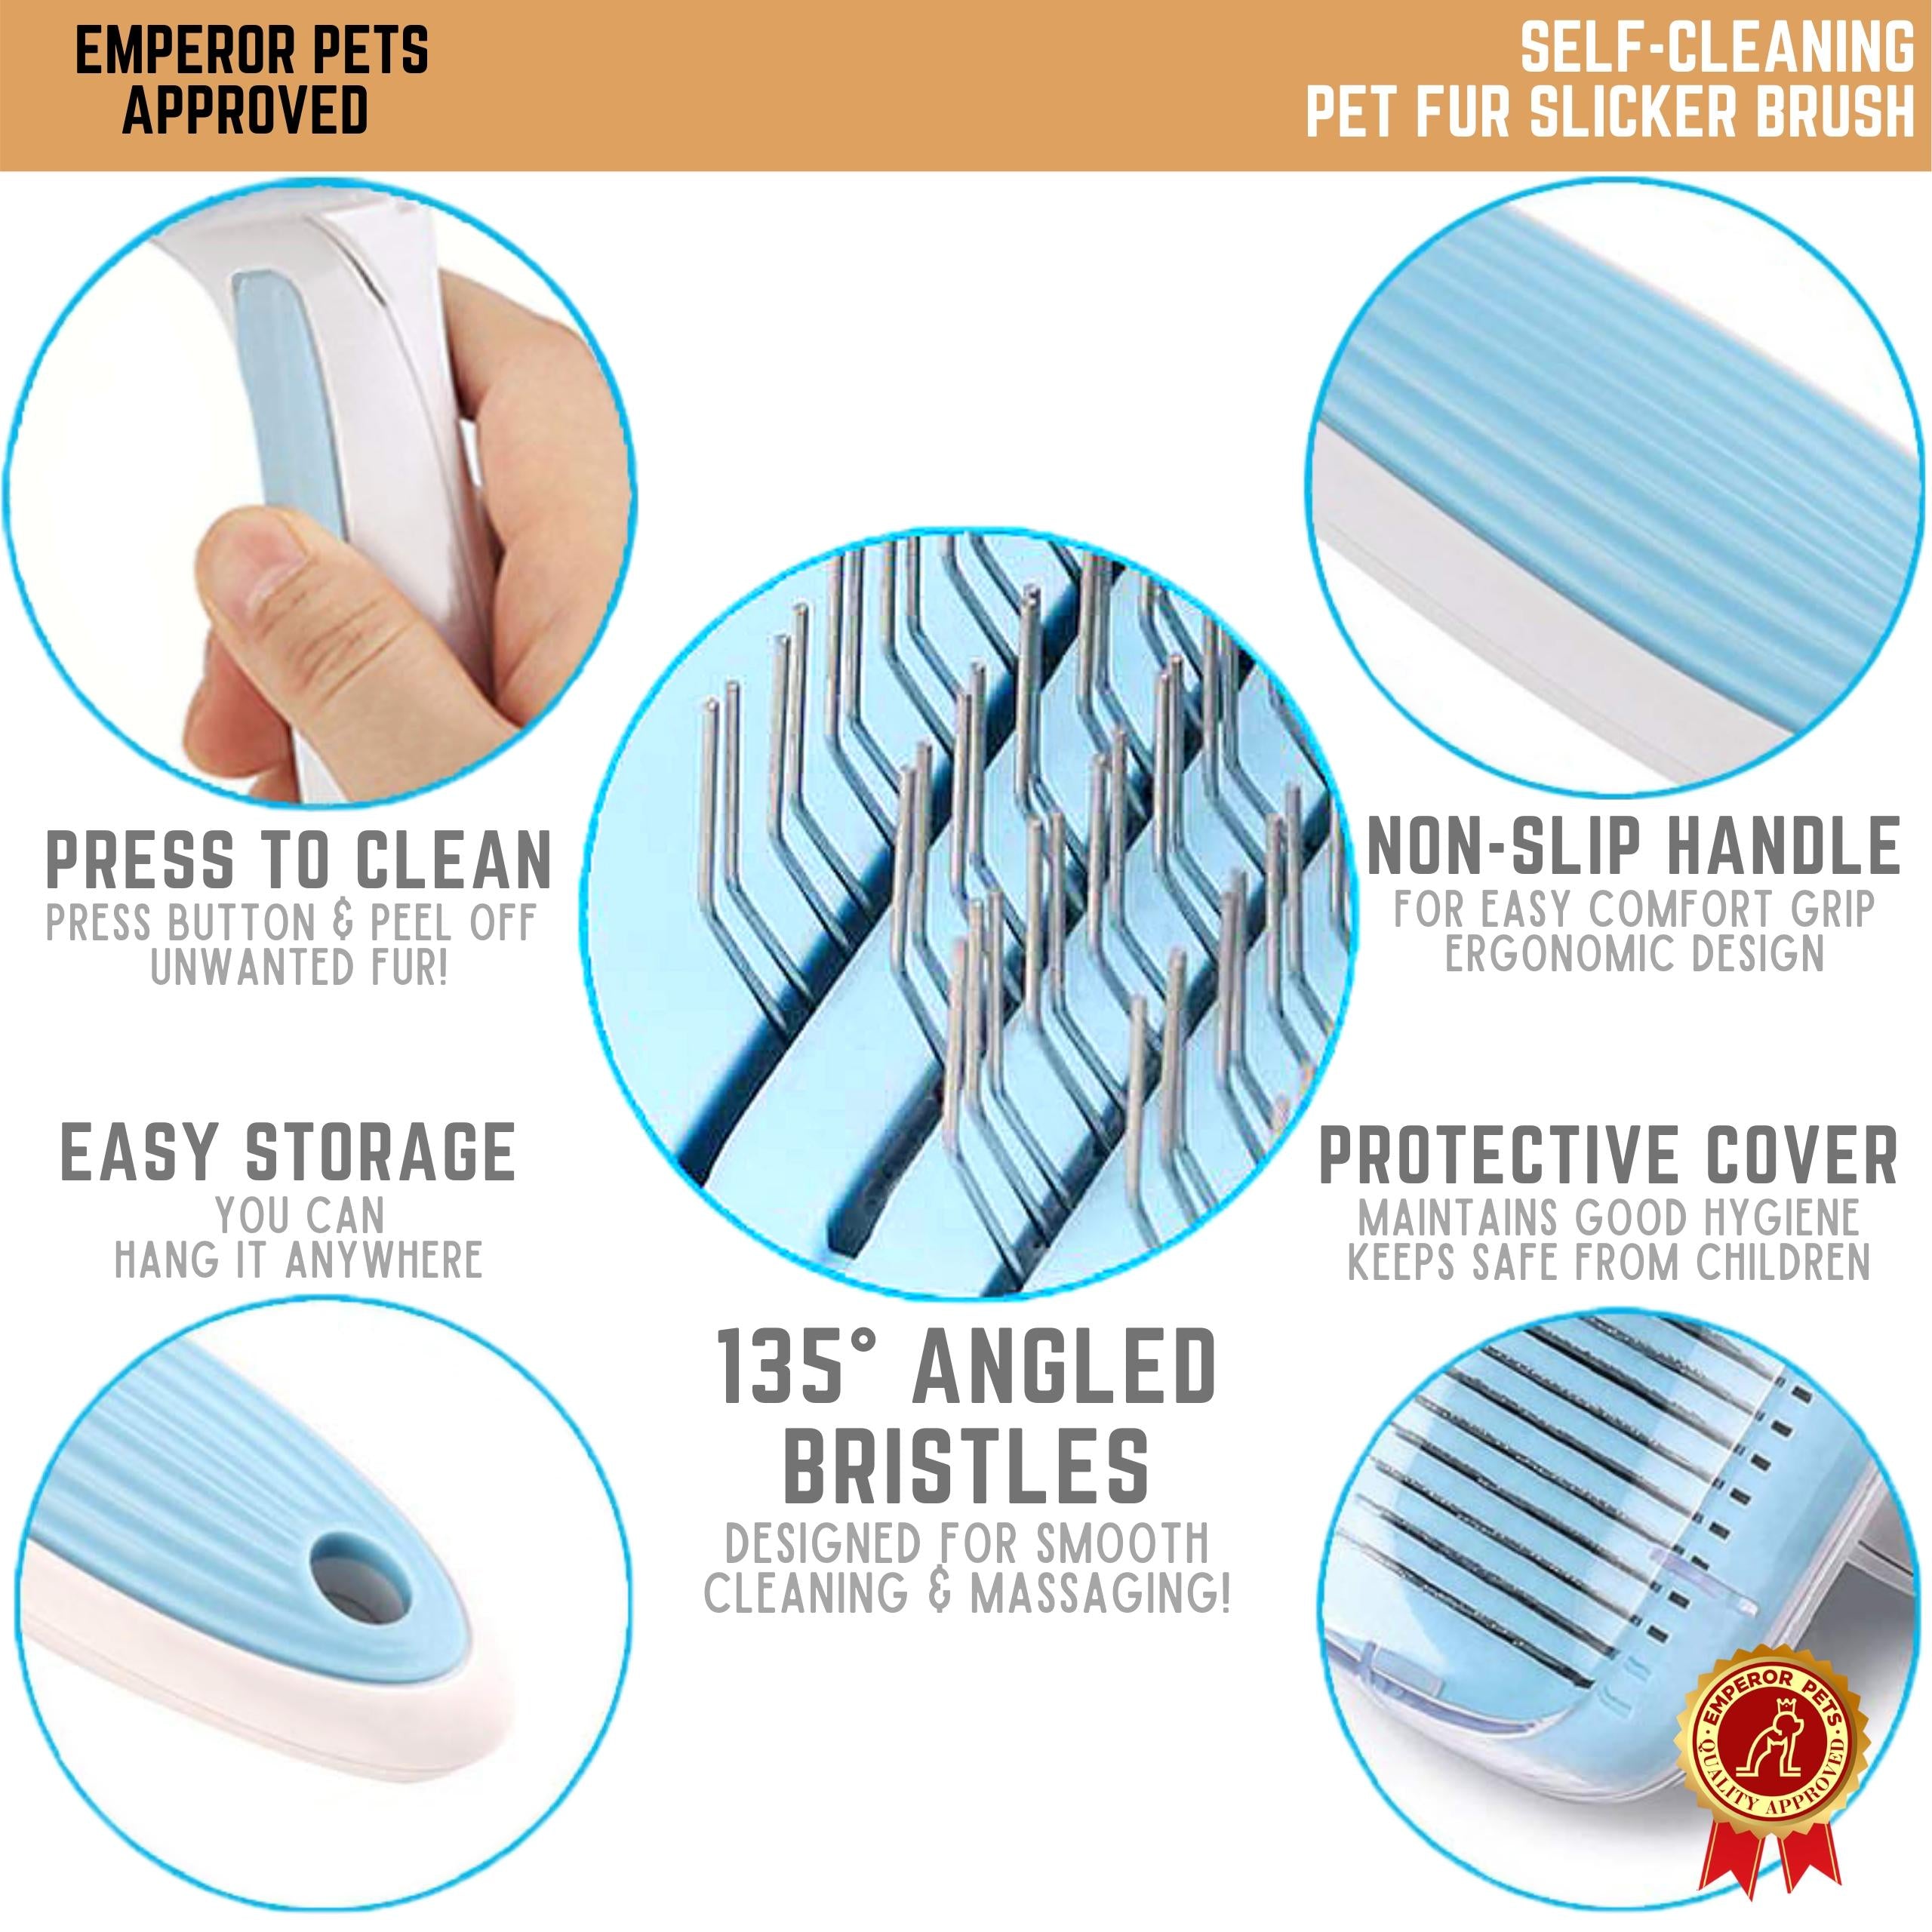 Emperor Pets Self Cleaning Pet Fur Slicker Brush for Long Fur Pets, Dog Brush, Cat Brush, Blue Color - Image 3 Key Features